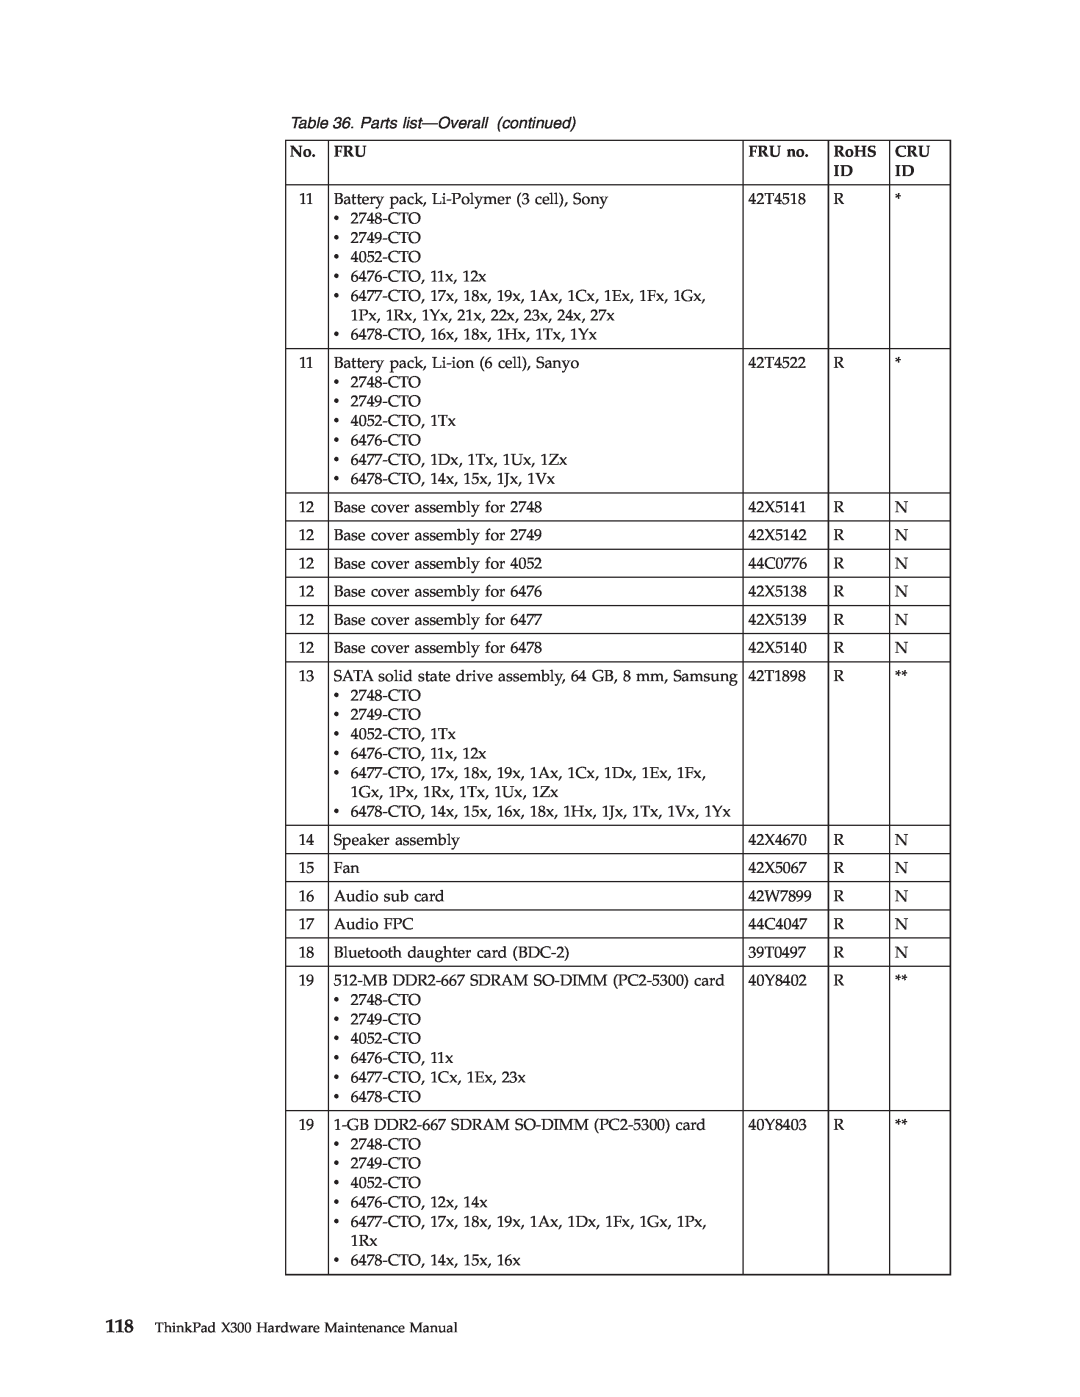 Lenovo manual Parts list-Overall continued, FRU no, RoHS, ThinkPad X300 Hardware Maintenance Manual 